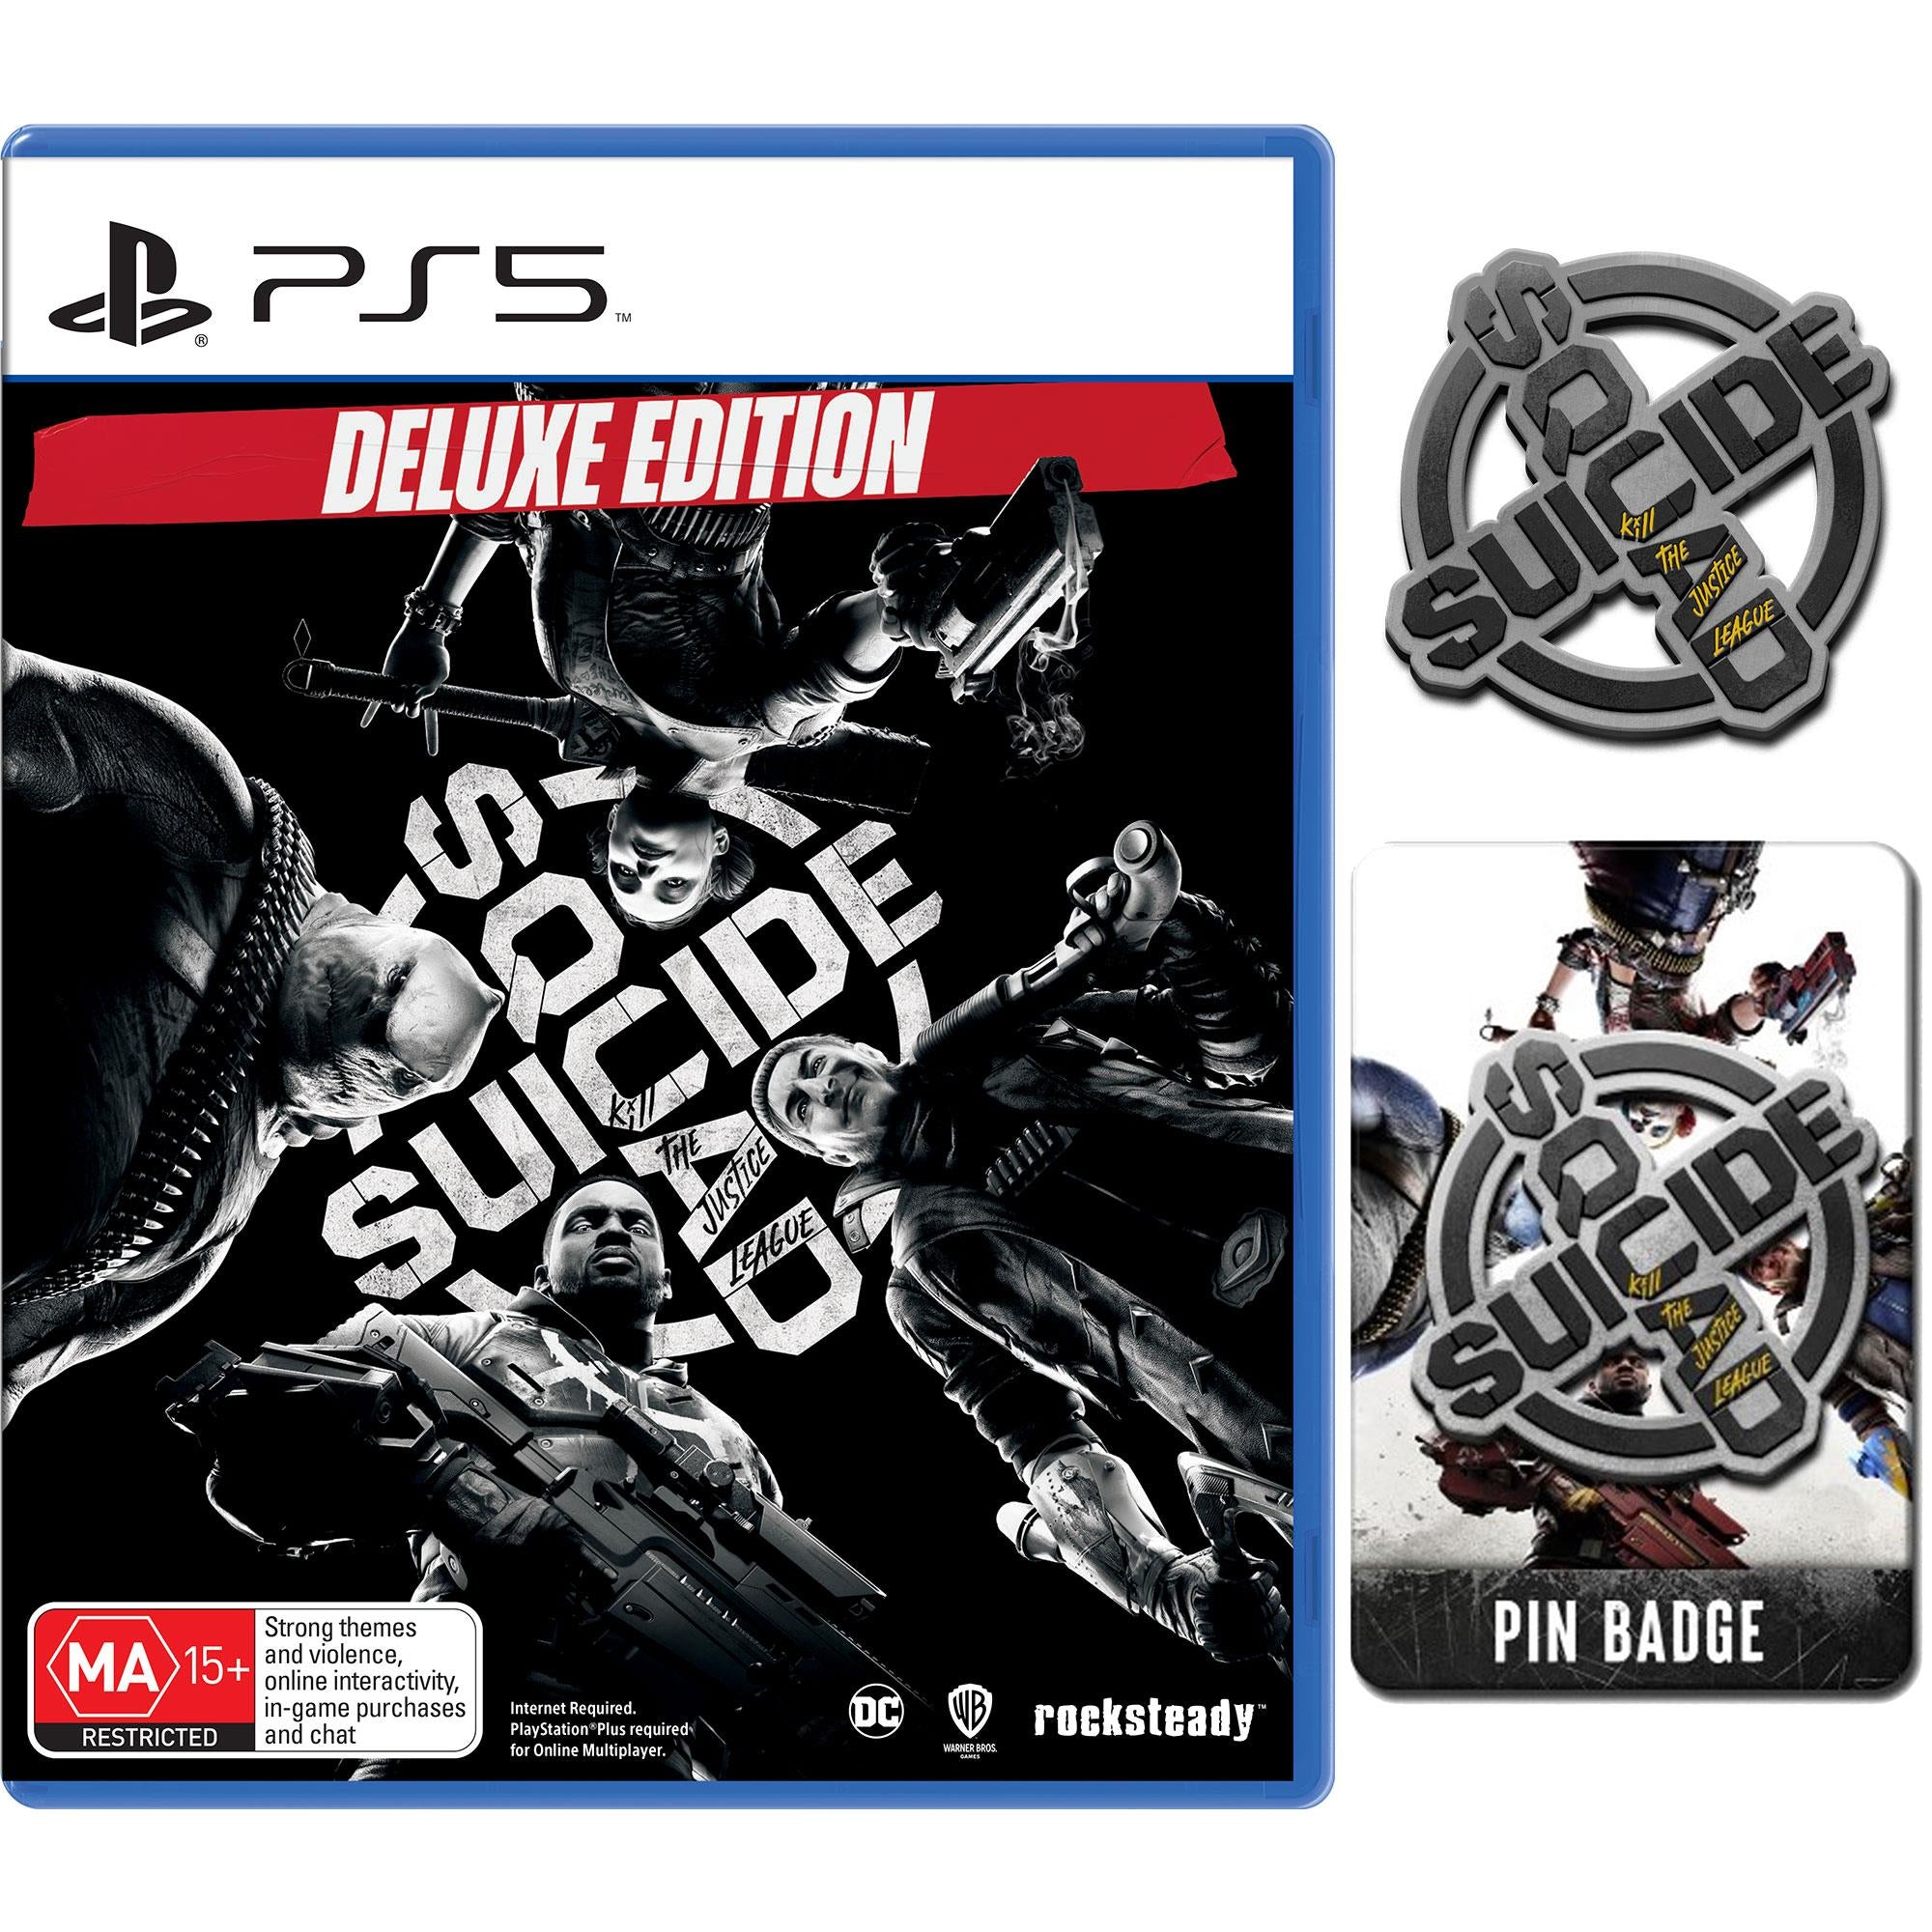 Suicide Squad: Kill the Justice League - Digital Deluxe Edition